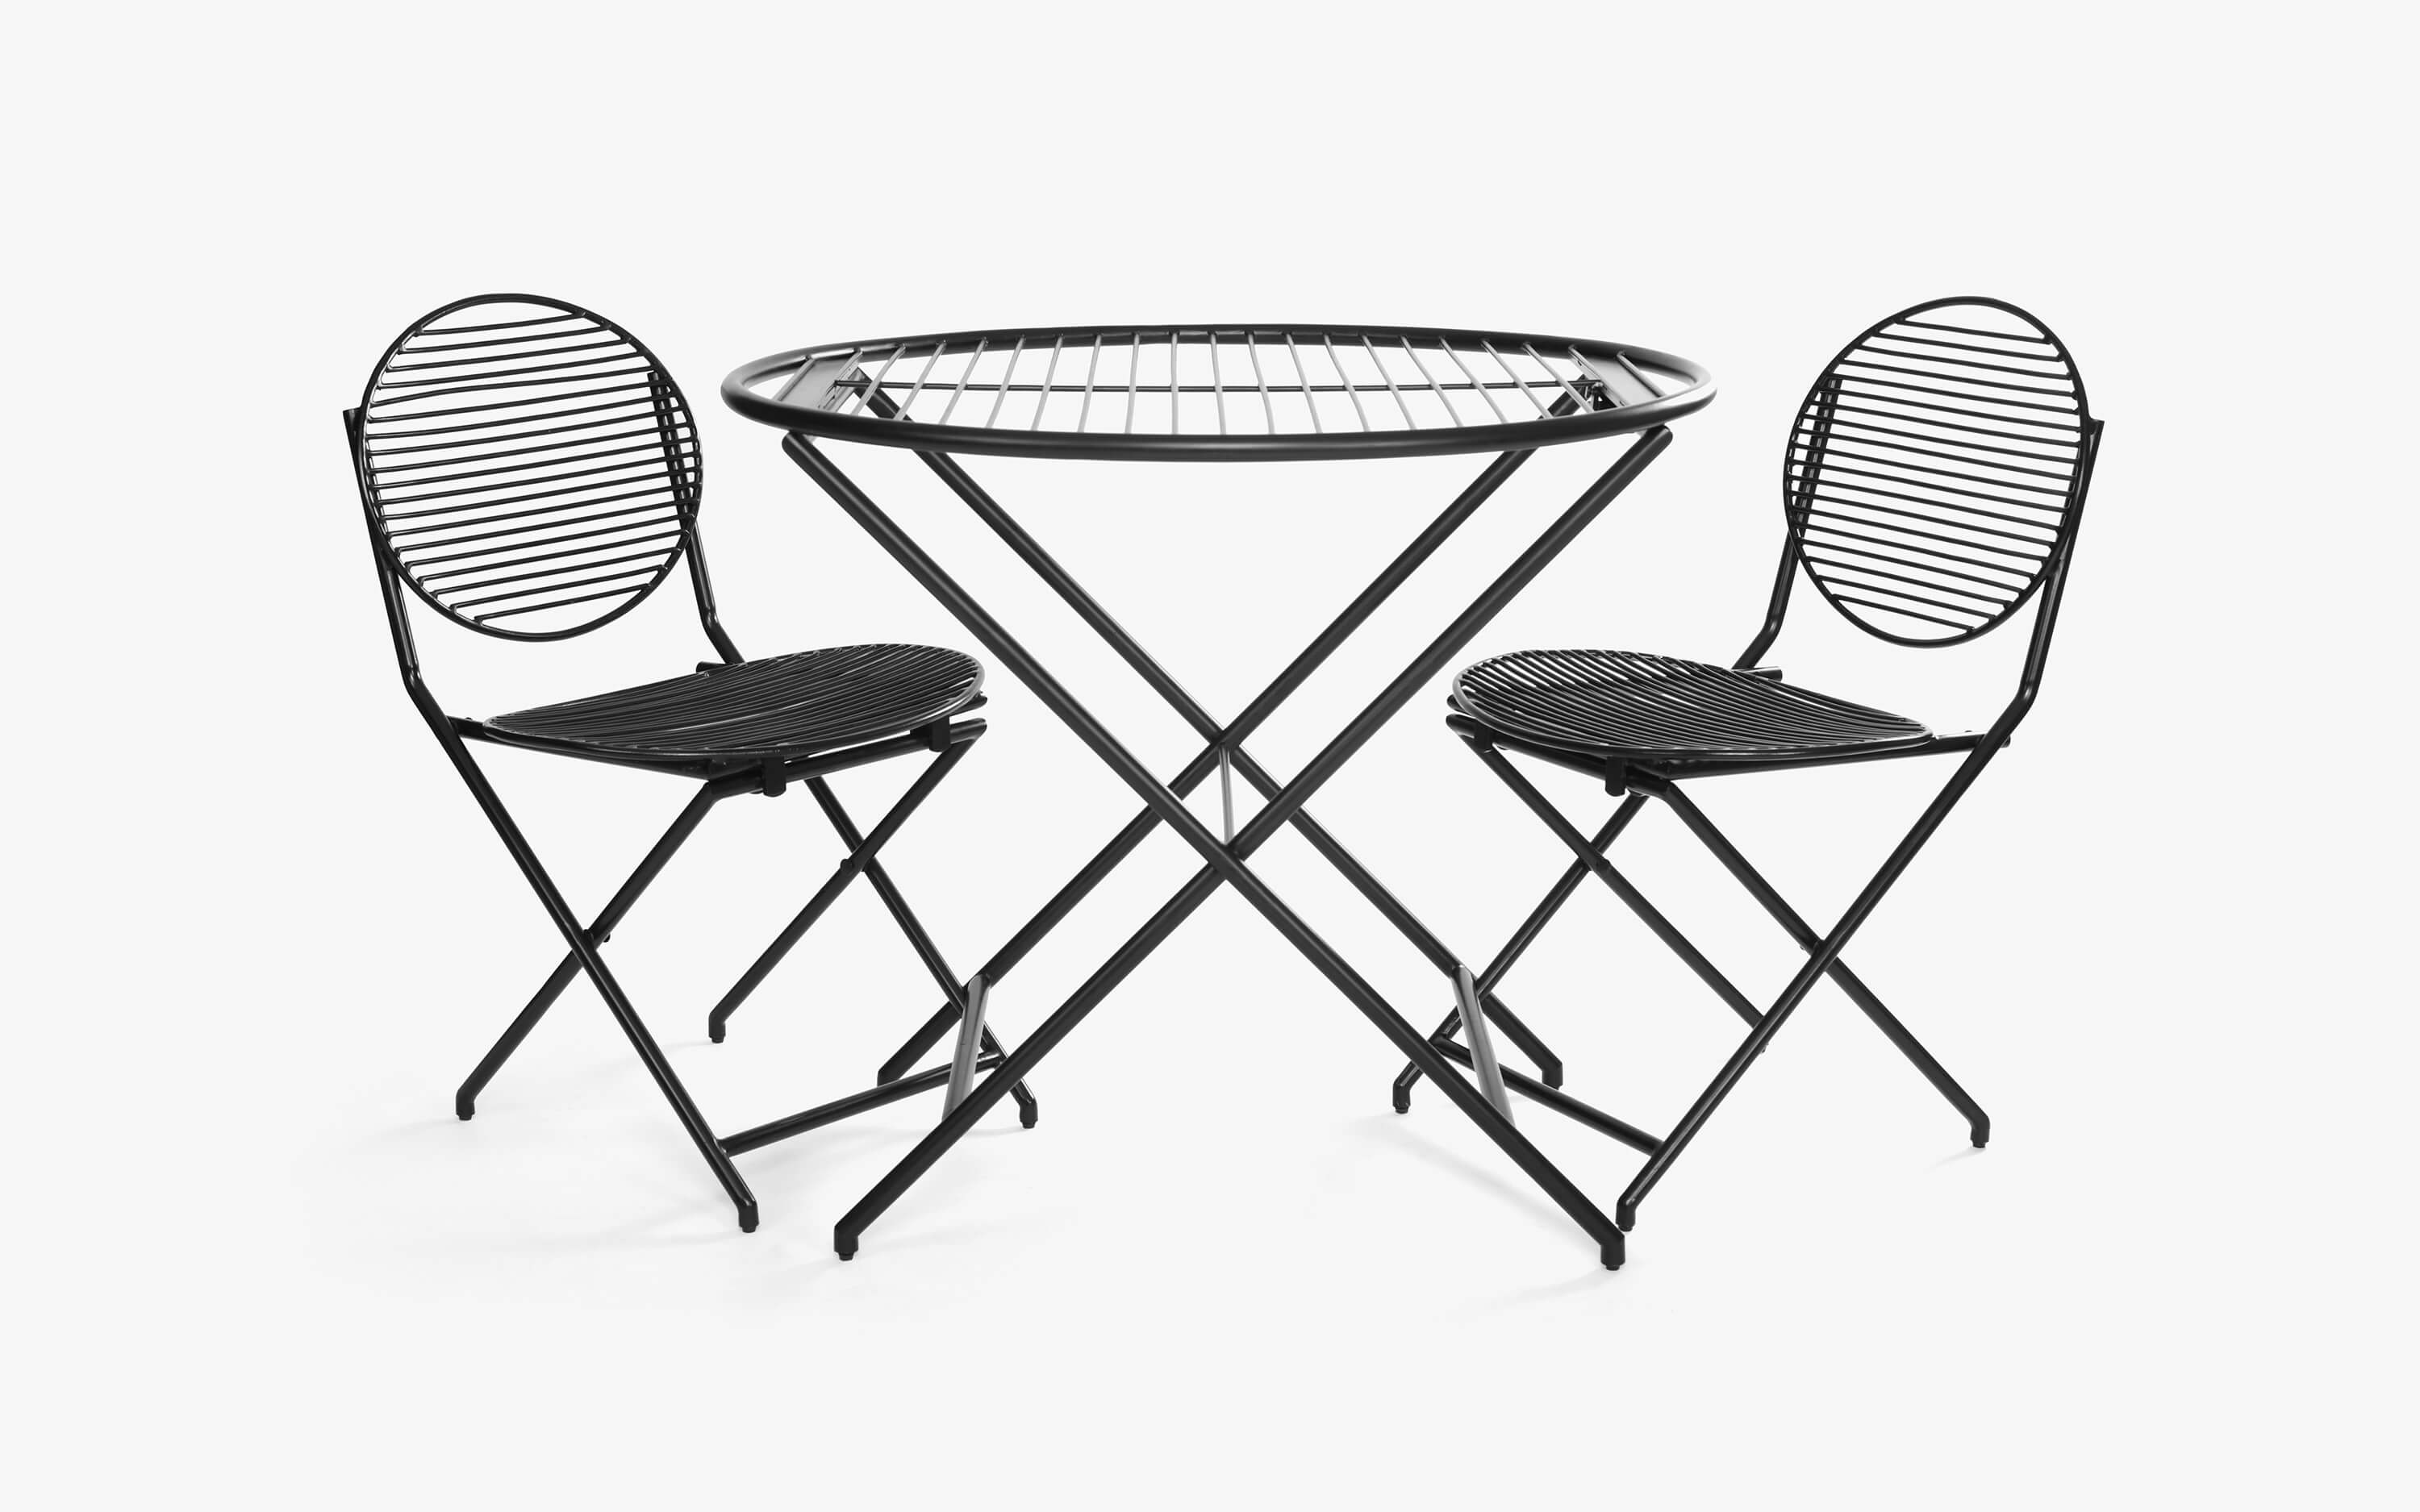 Patio Black Table Set With 2 Chairs - Orange Tree Home Pvt. Ltd.